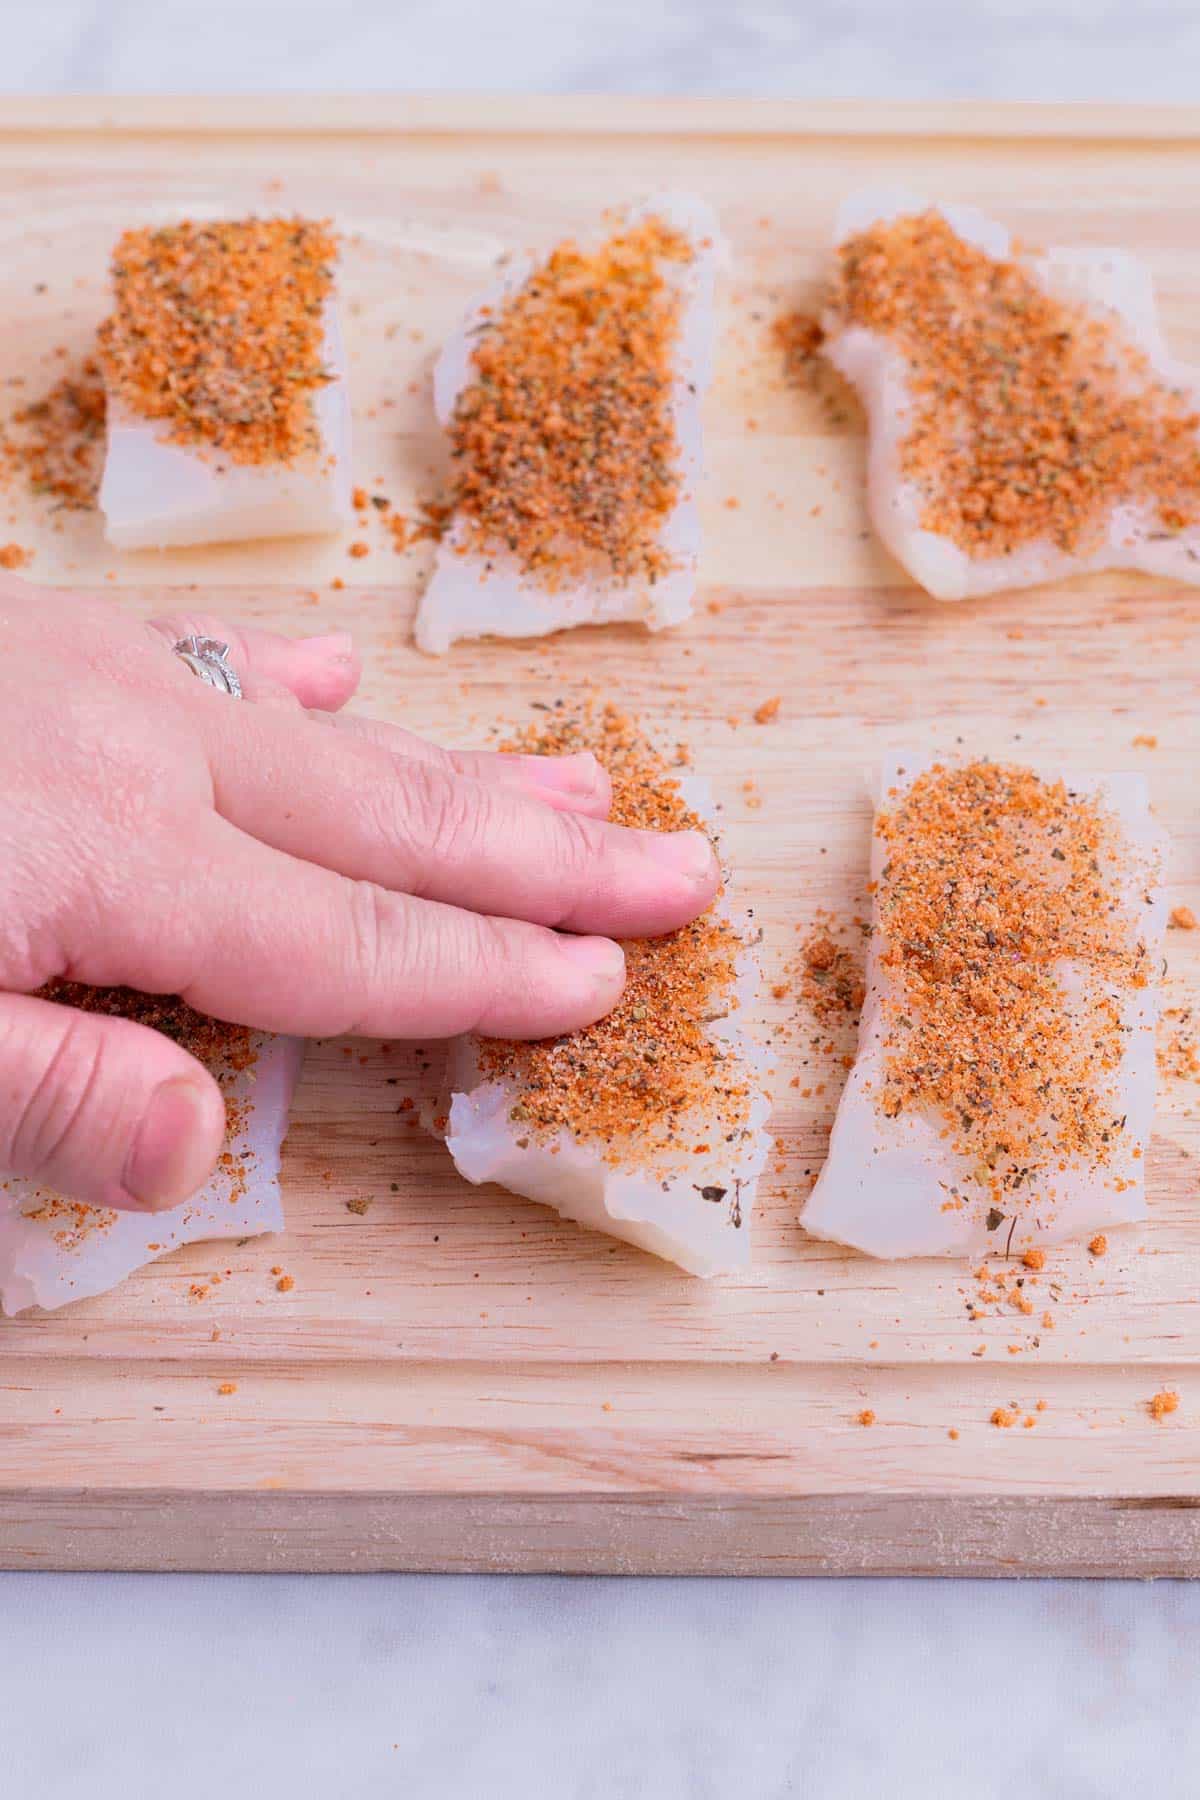 A hand presses blackened seasoning into fish filets.